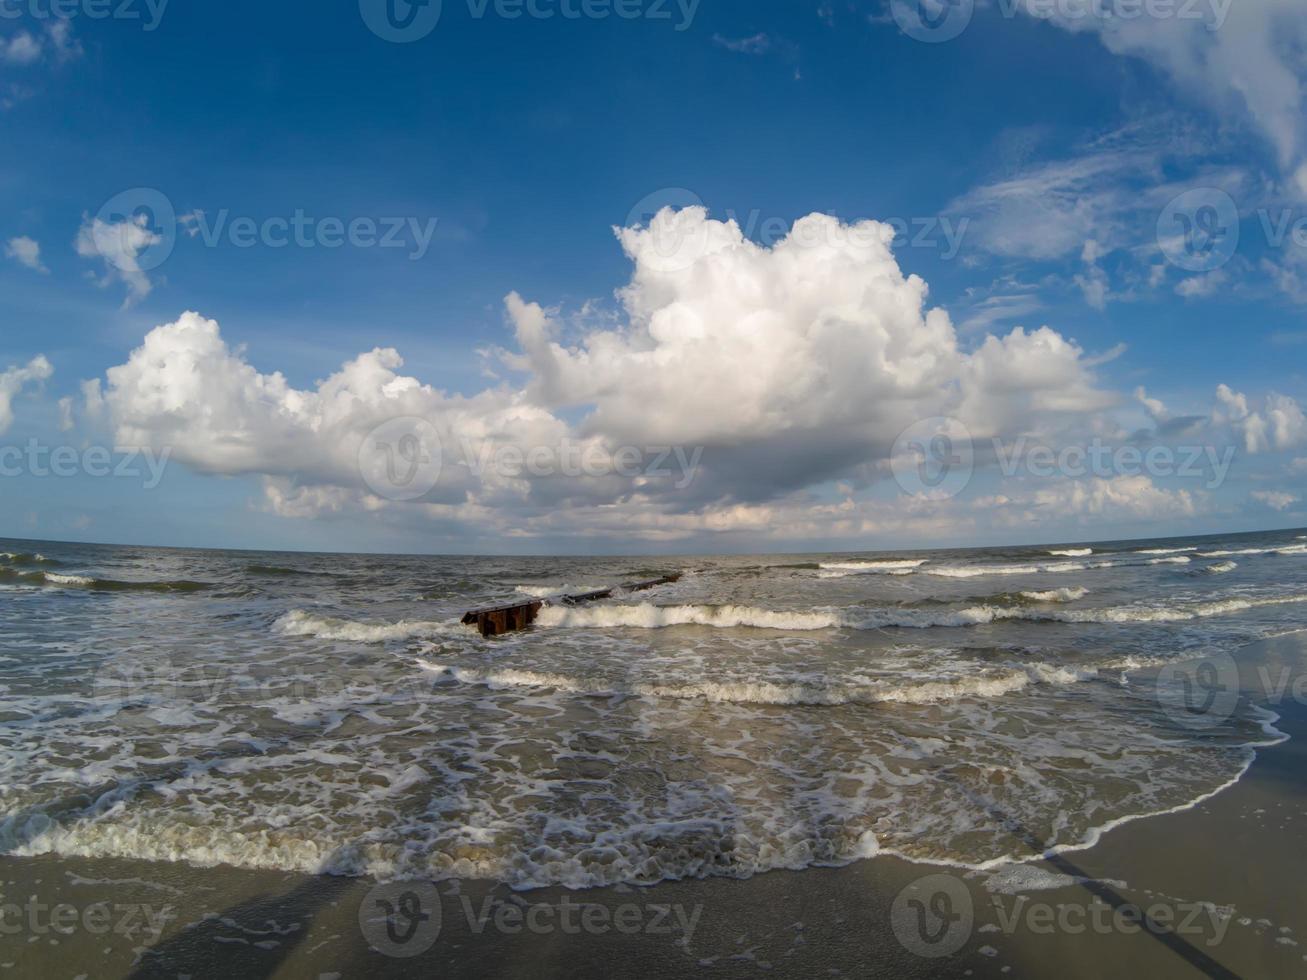 Strandszenen auf der Jagdinsel South Carolina foto